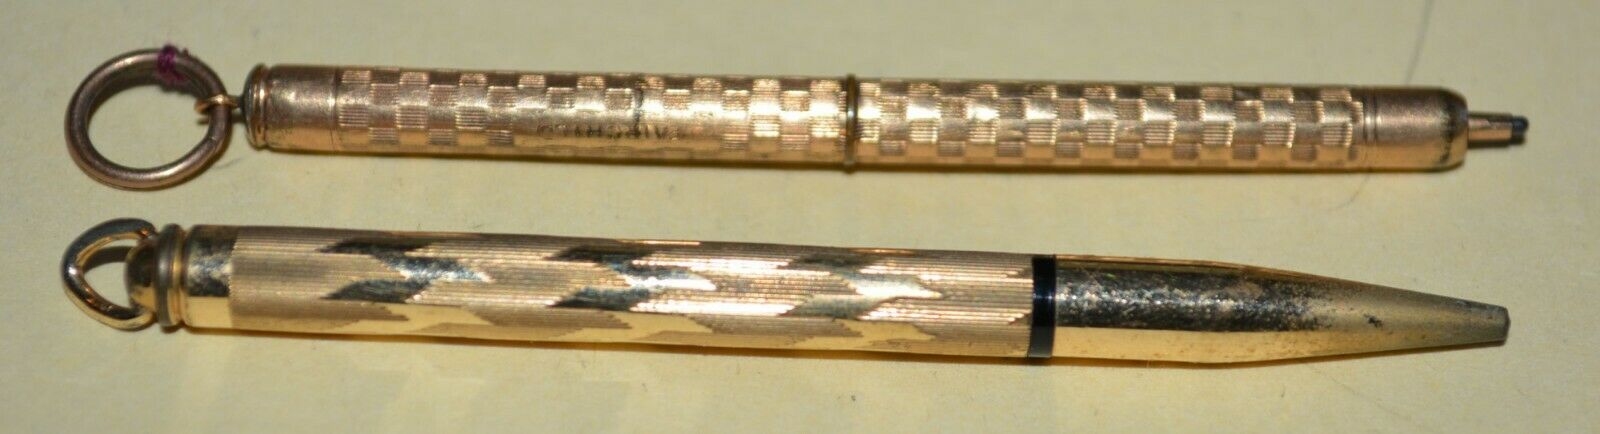 Collectible Antique Vintage Gold filled Mechanical pen pencil LOT of 2 pendant